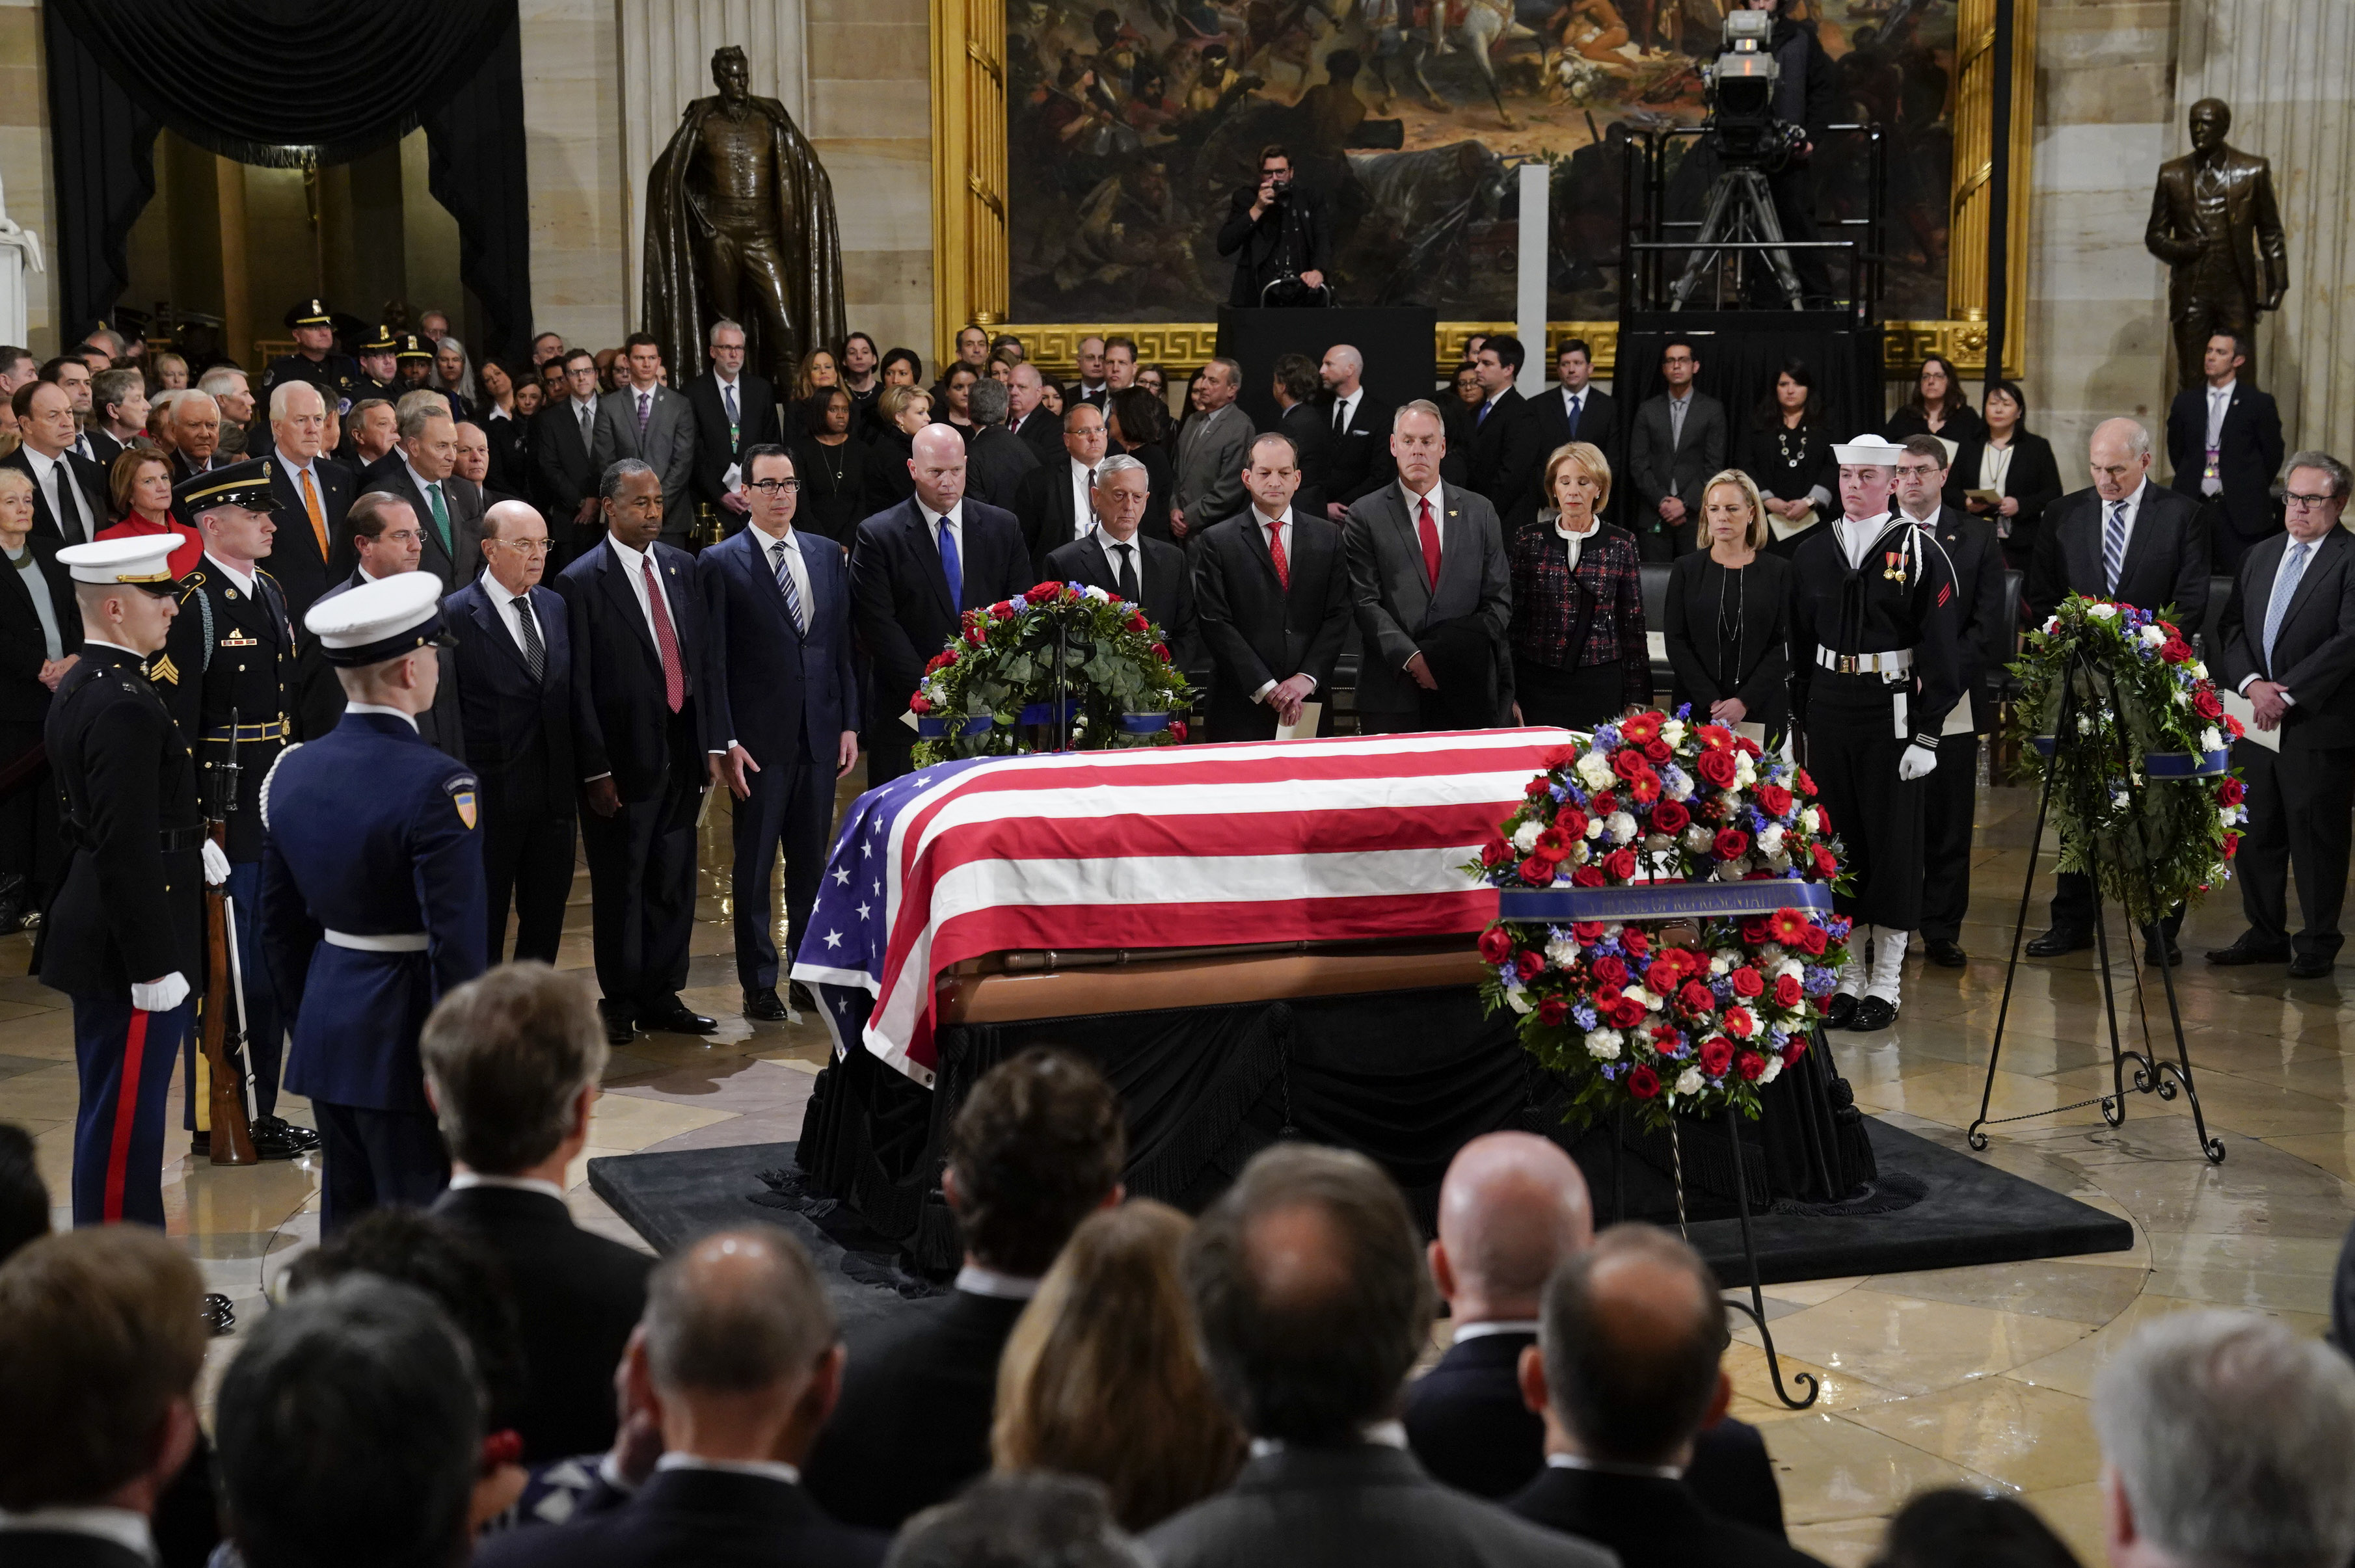 Похорони президента. Похороны президента США Джорджа Буша. Похороны Джорджа Буша. Джордж Буш старший похороны. Могила Джорджа Буша.